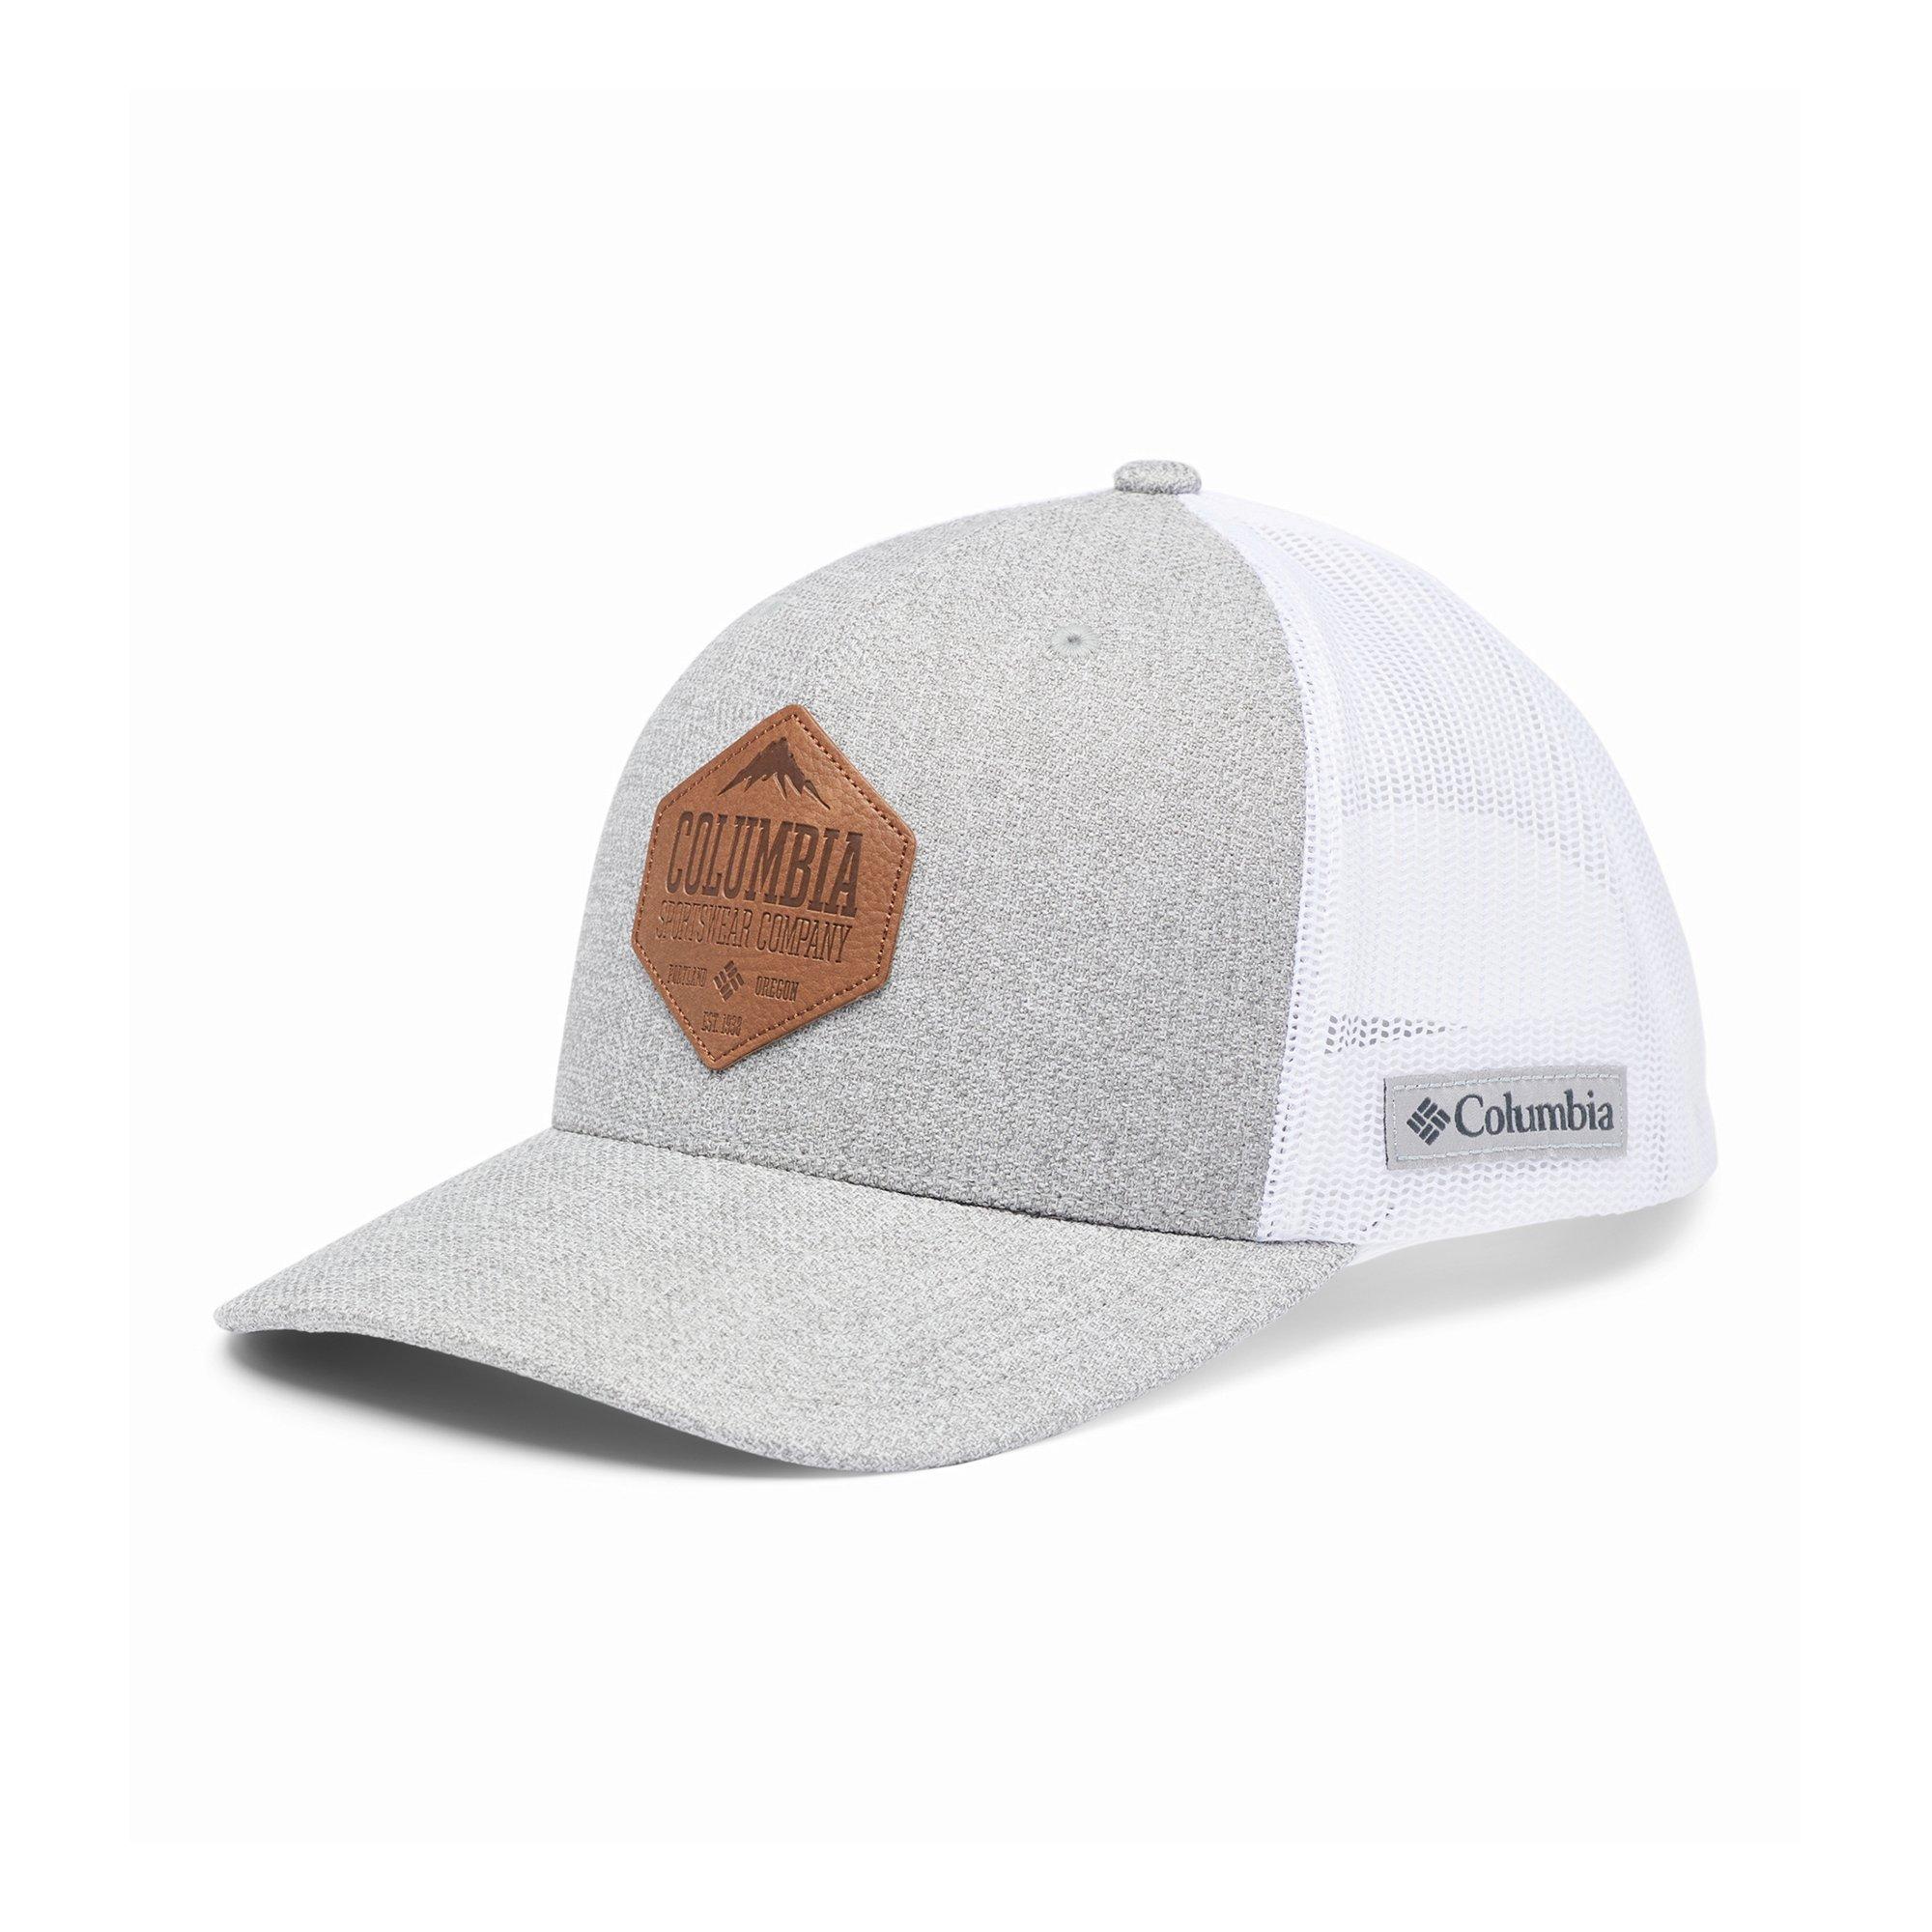 Columbia PFG Meshback Snapback Hat - Grey/White - Hibbett